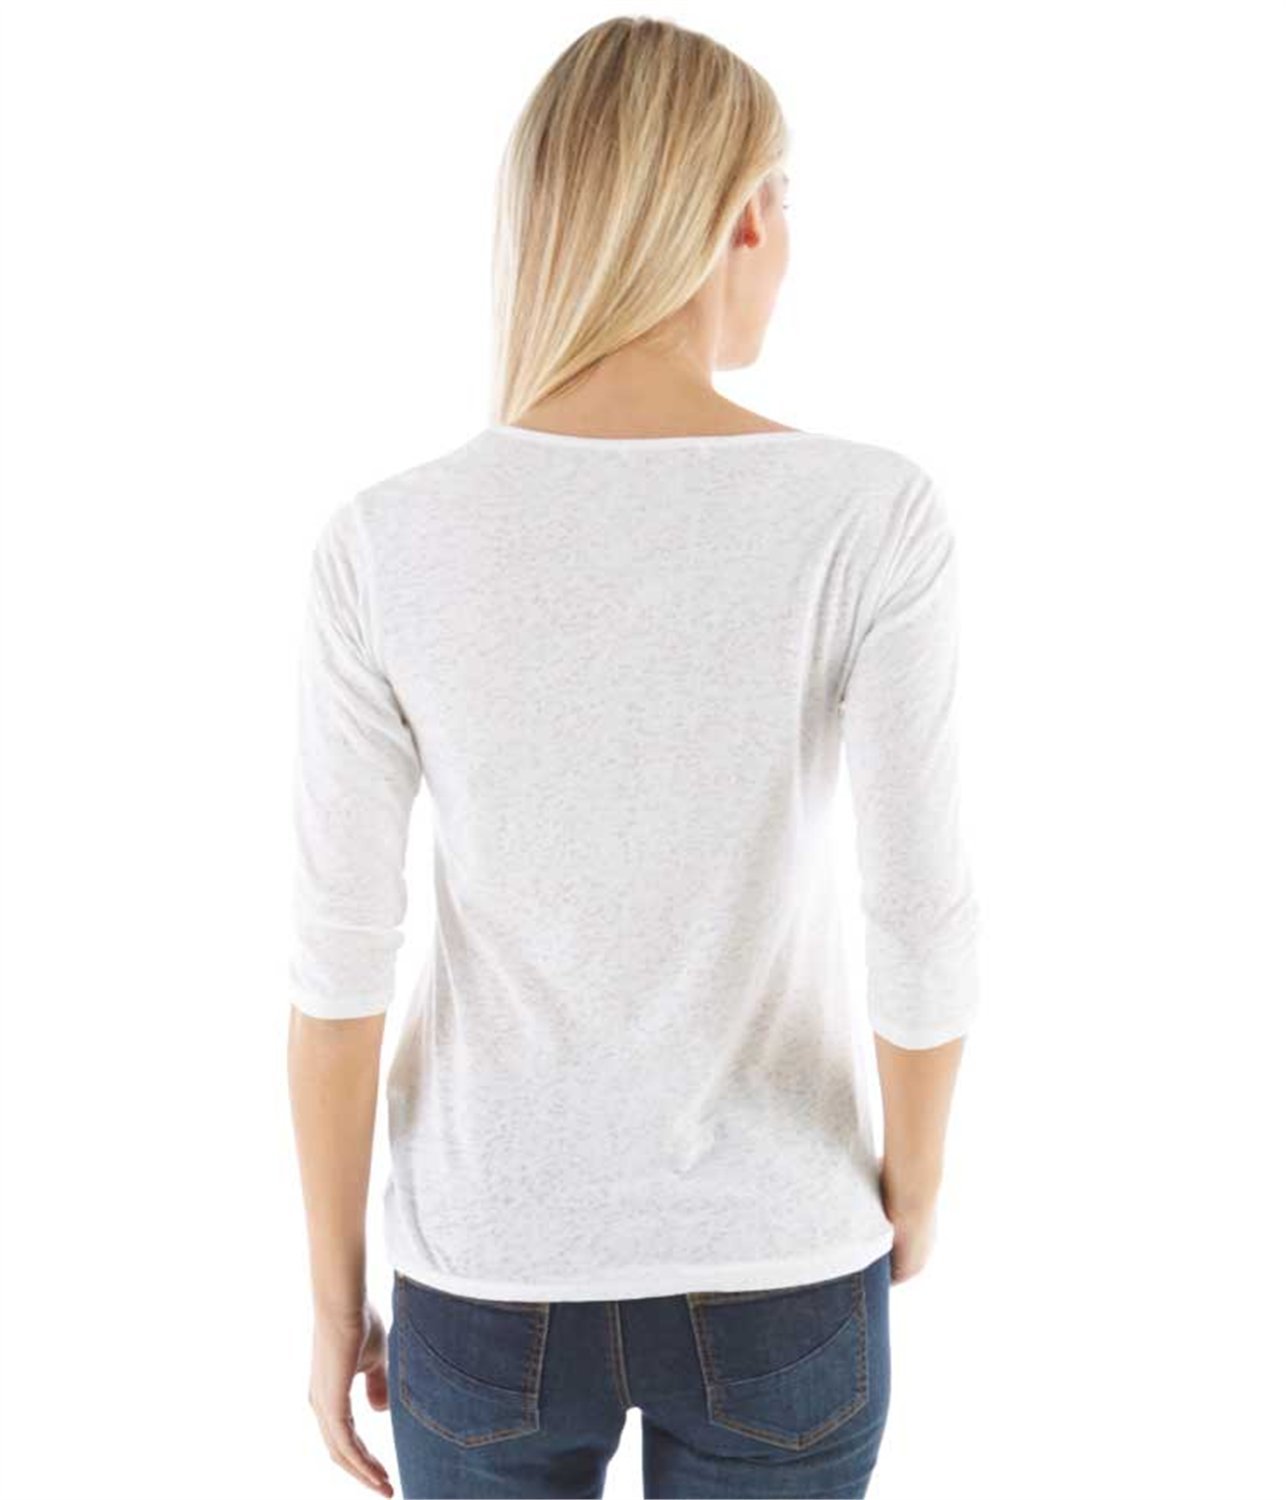 Camaieu mintás fehér női póló 2015 fotója